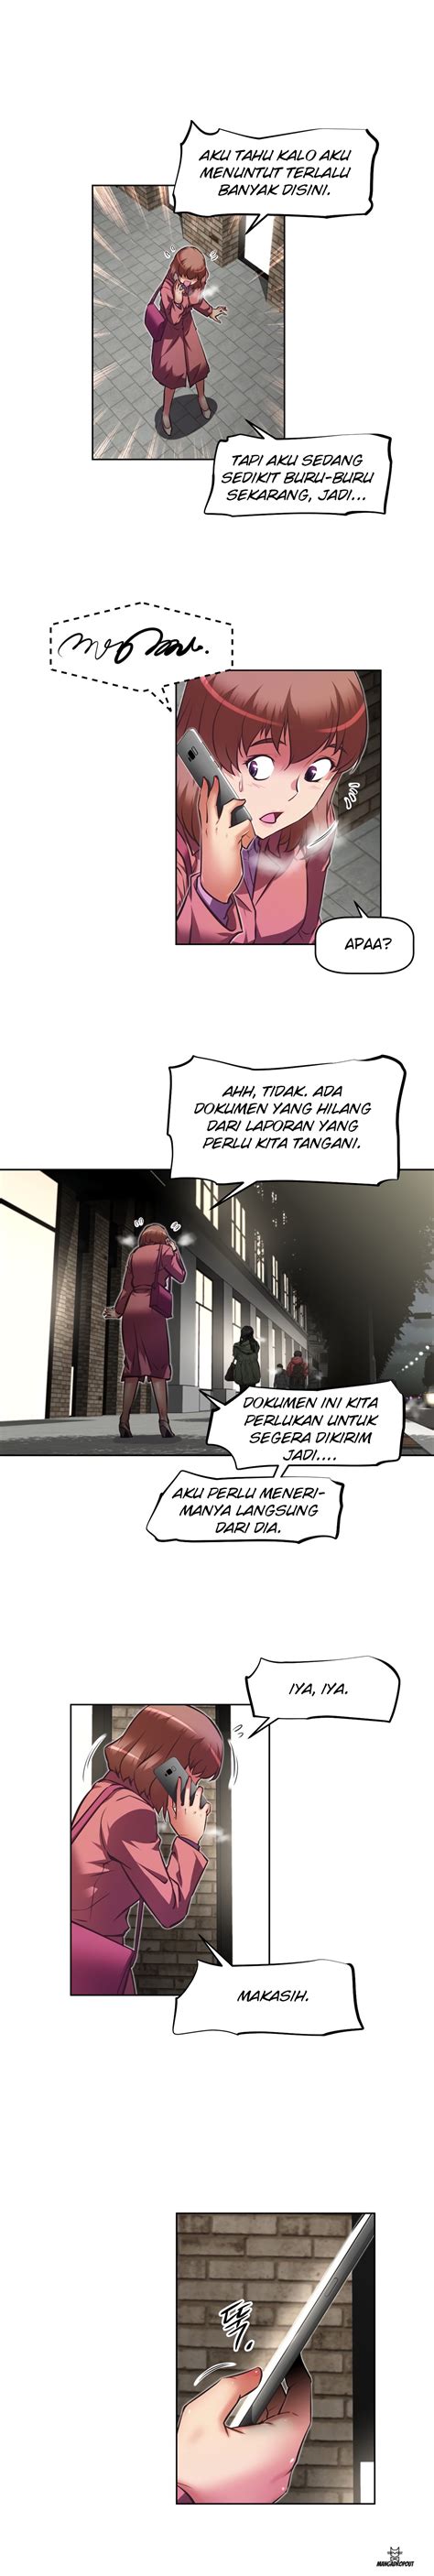 Baca manhwa brawling go berbahasa indonesia baca di komikindo. Brawling Go Chapter 117